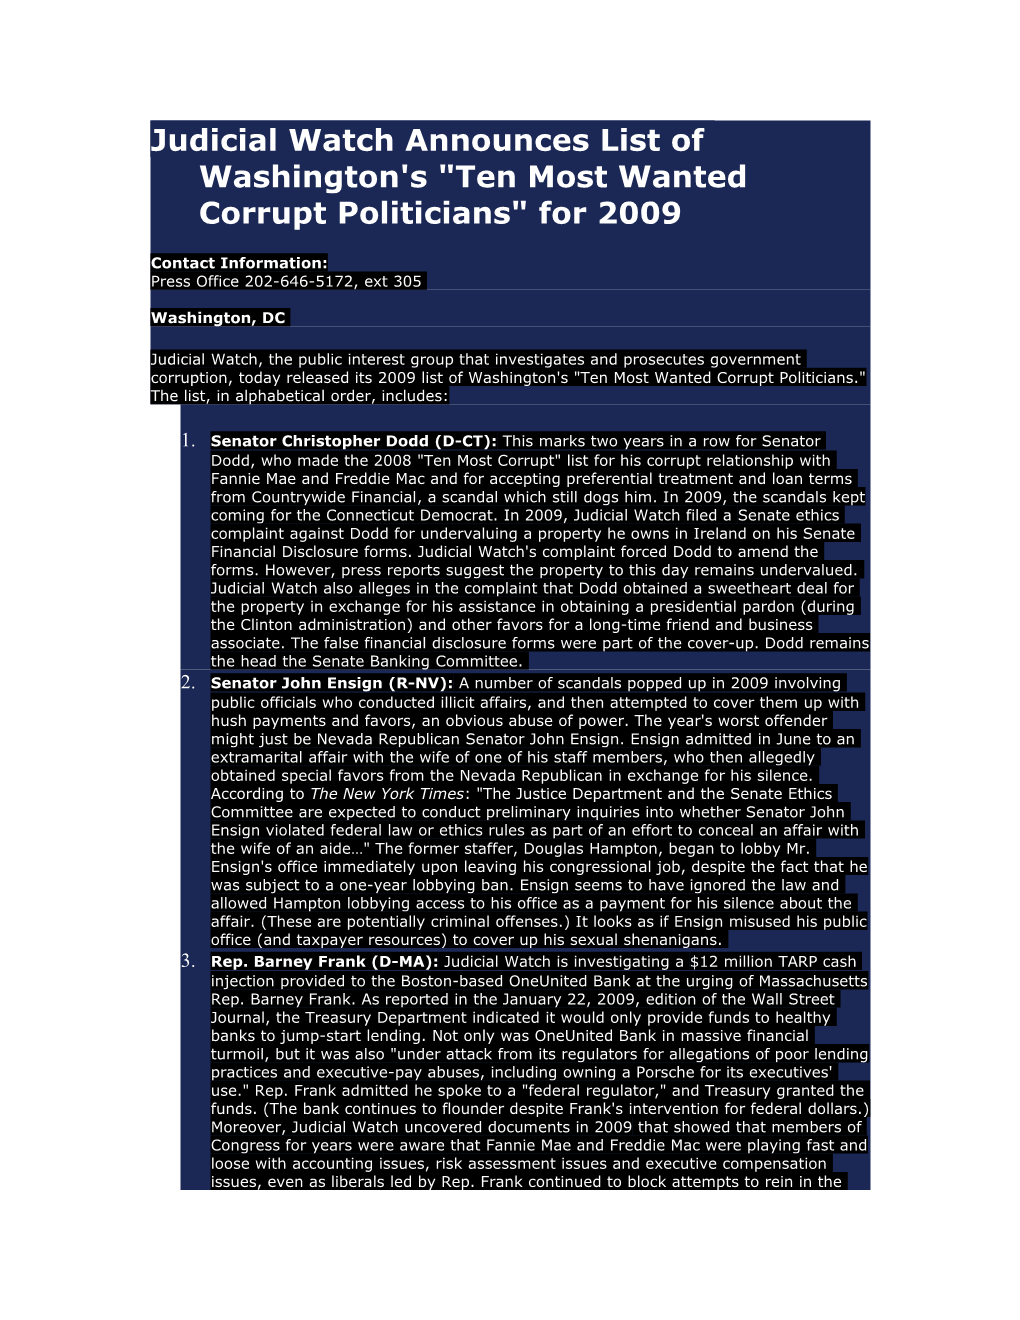 Judicial Watch Announces List of Washington's Ten Most Wanted Corrupt Politicians for 2009